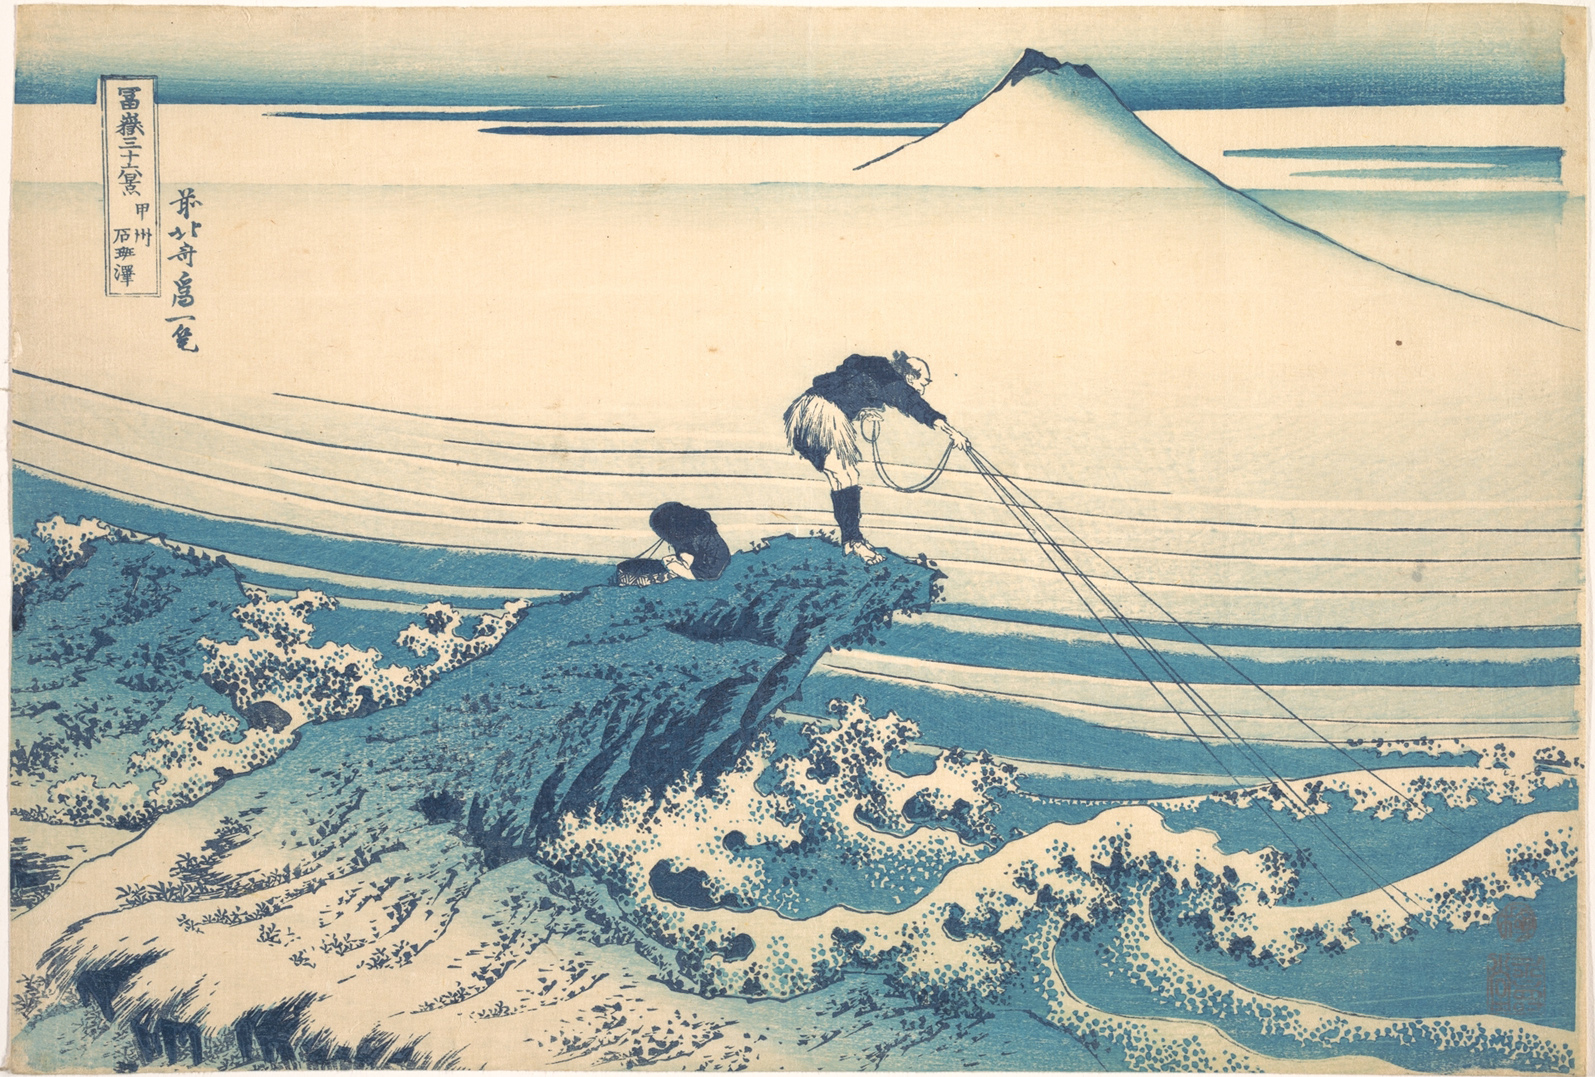 Hokusai's Kajikazawa in Kai Province is printed with only Prussian Blue